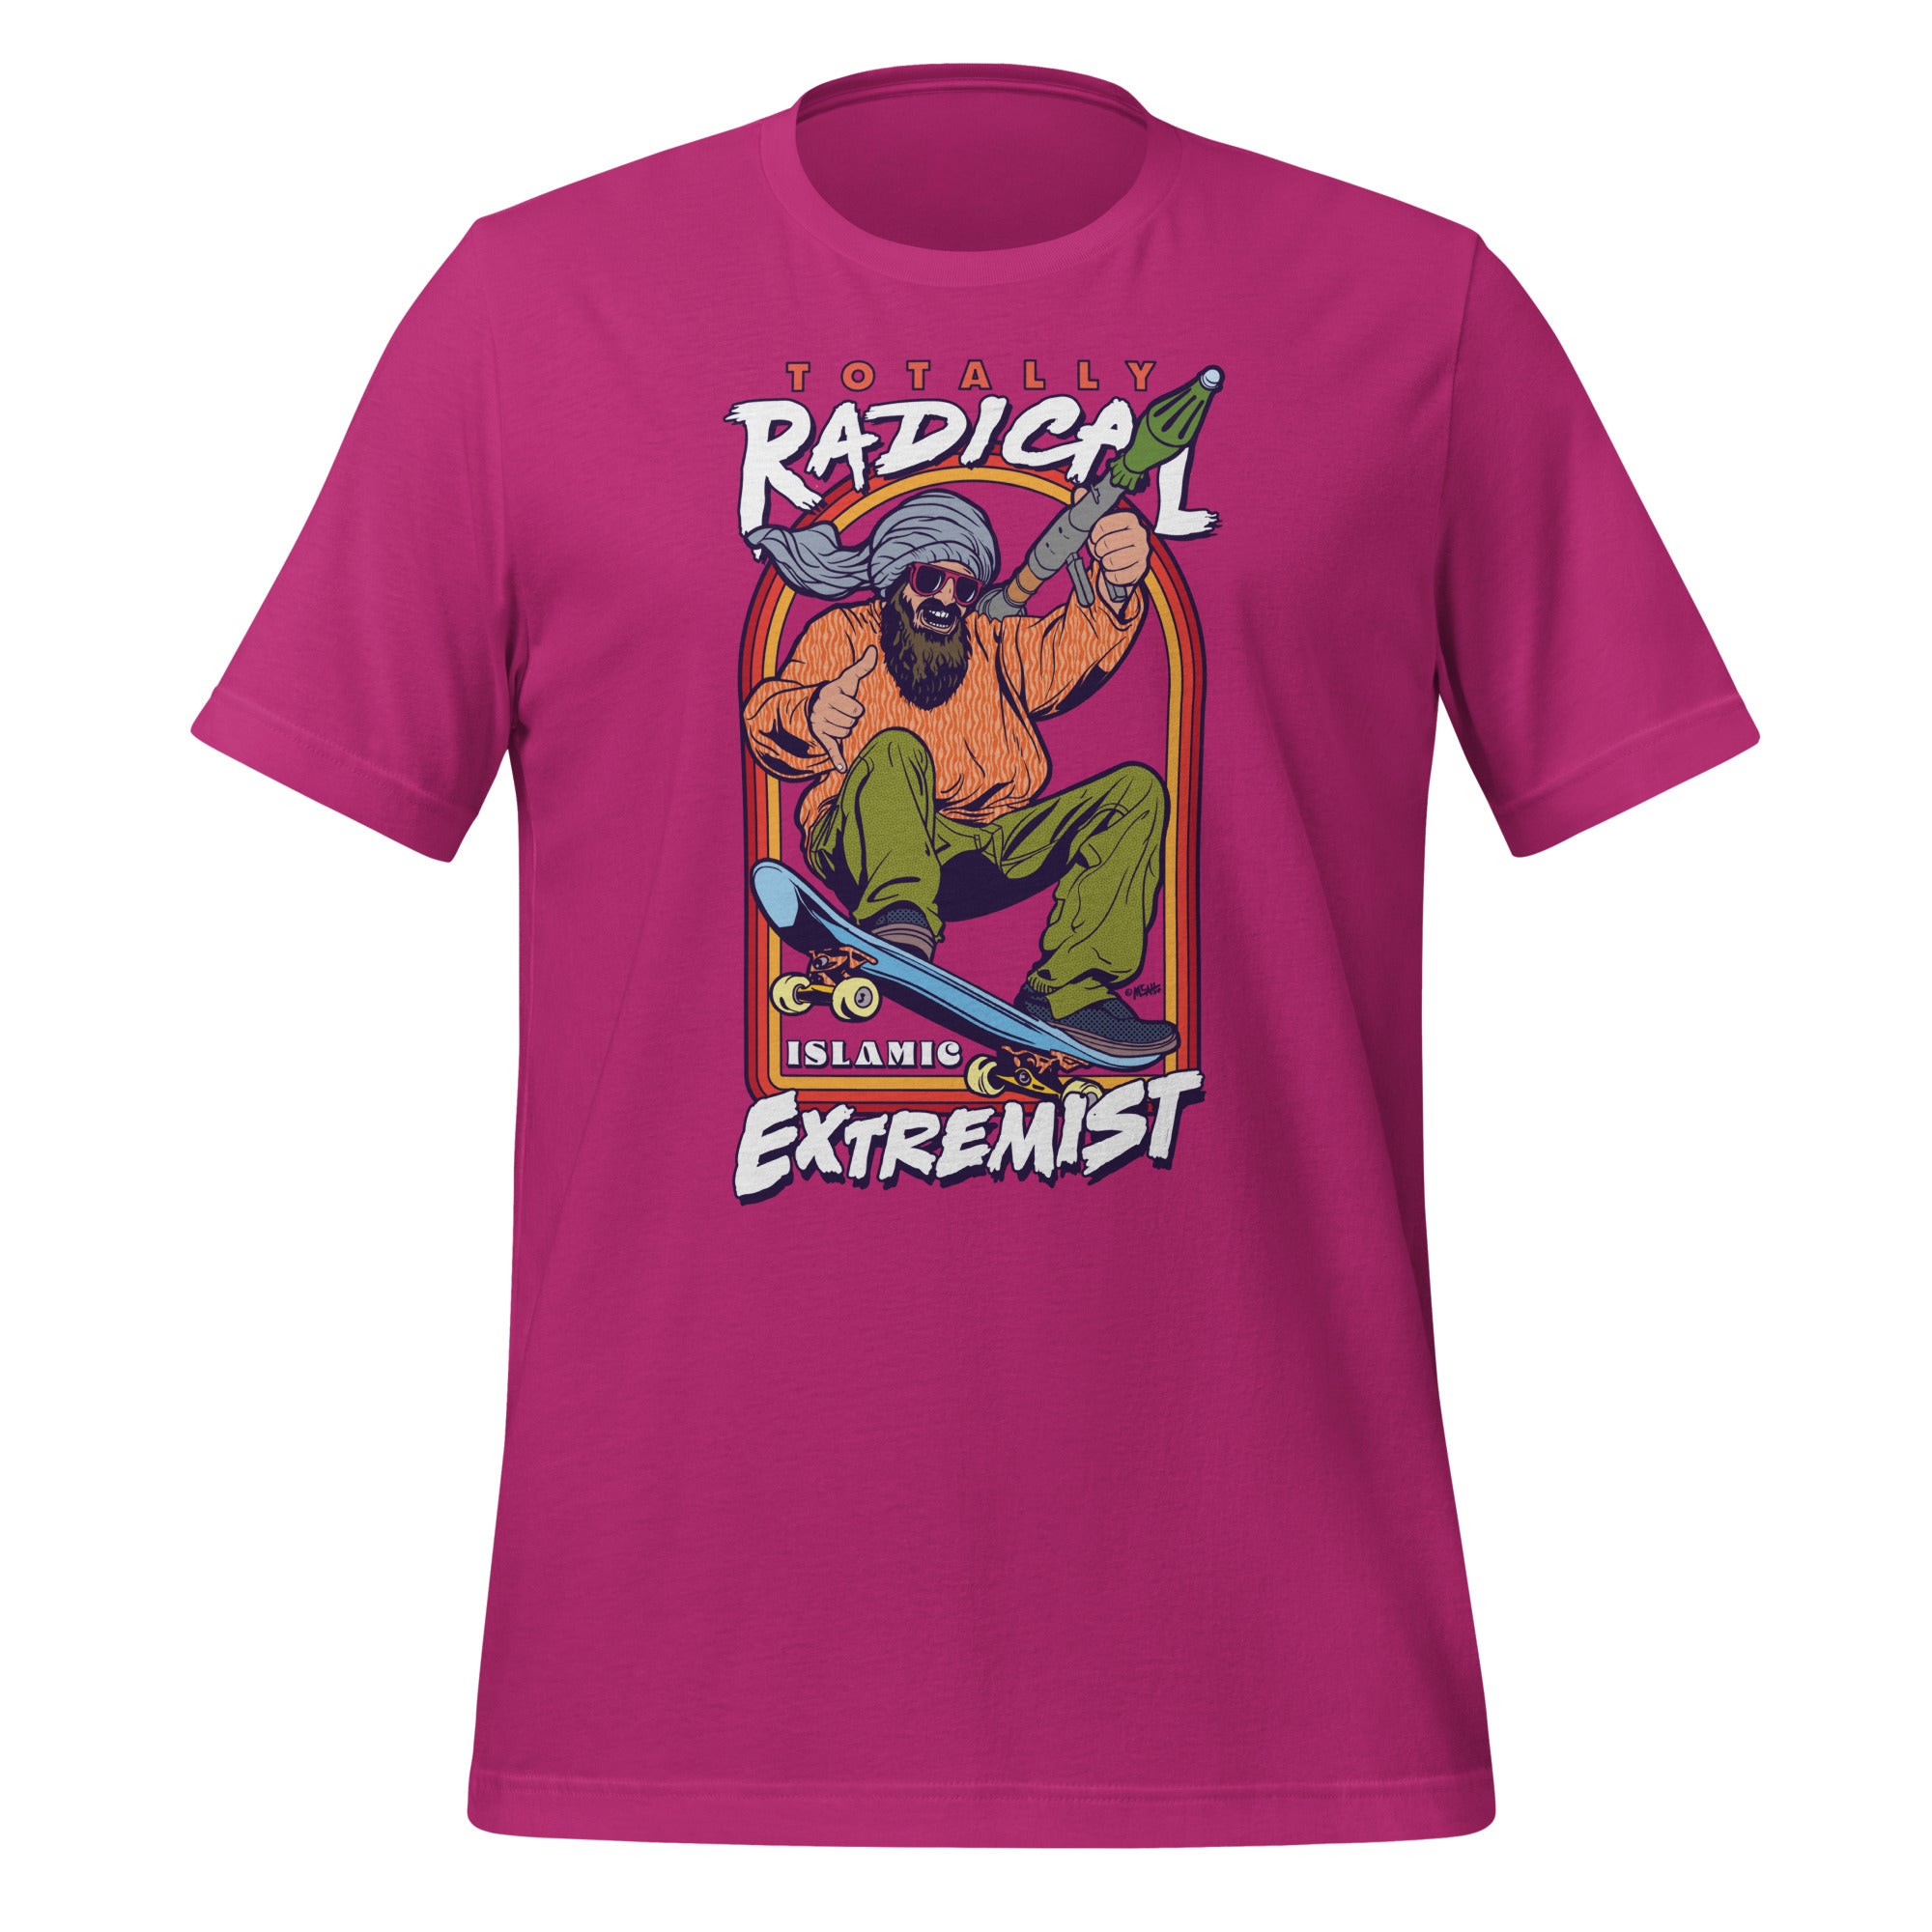 Totally Radical Islamic Extremist Graphic T-Shirt